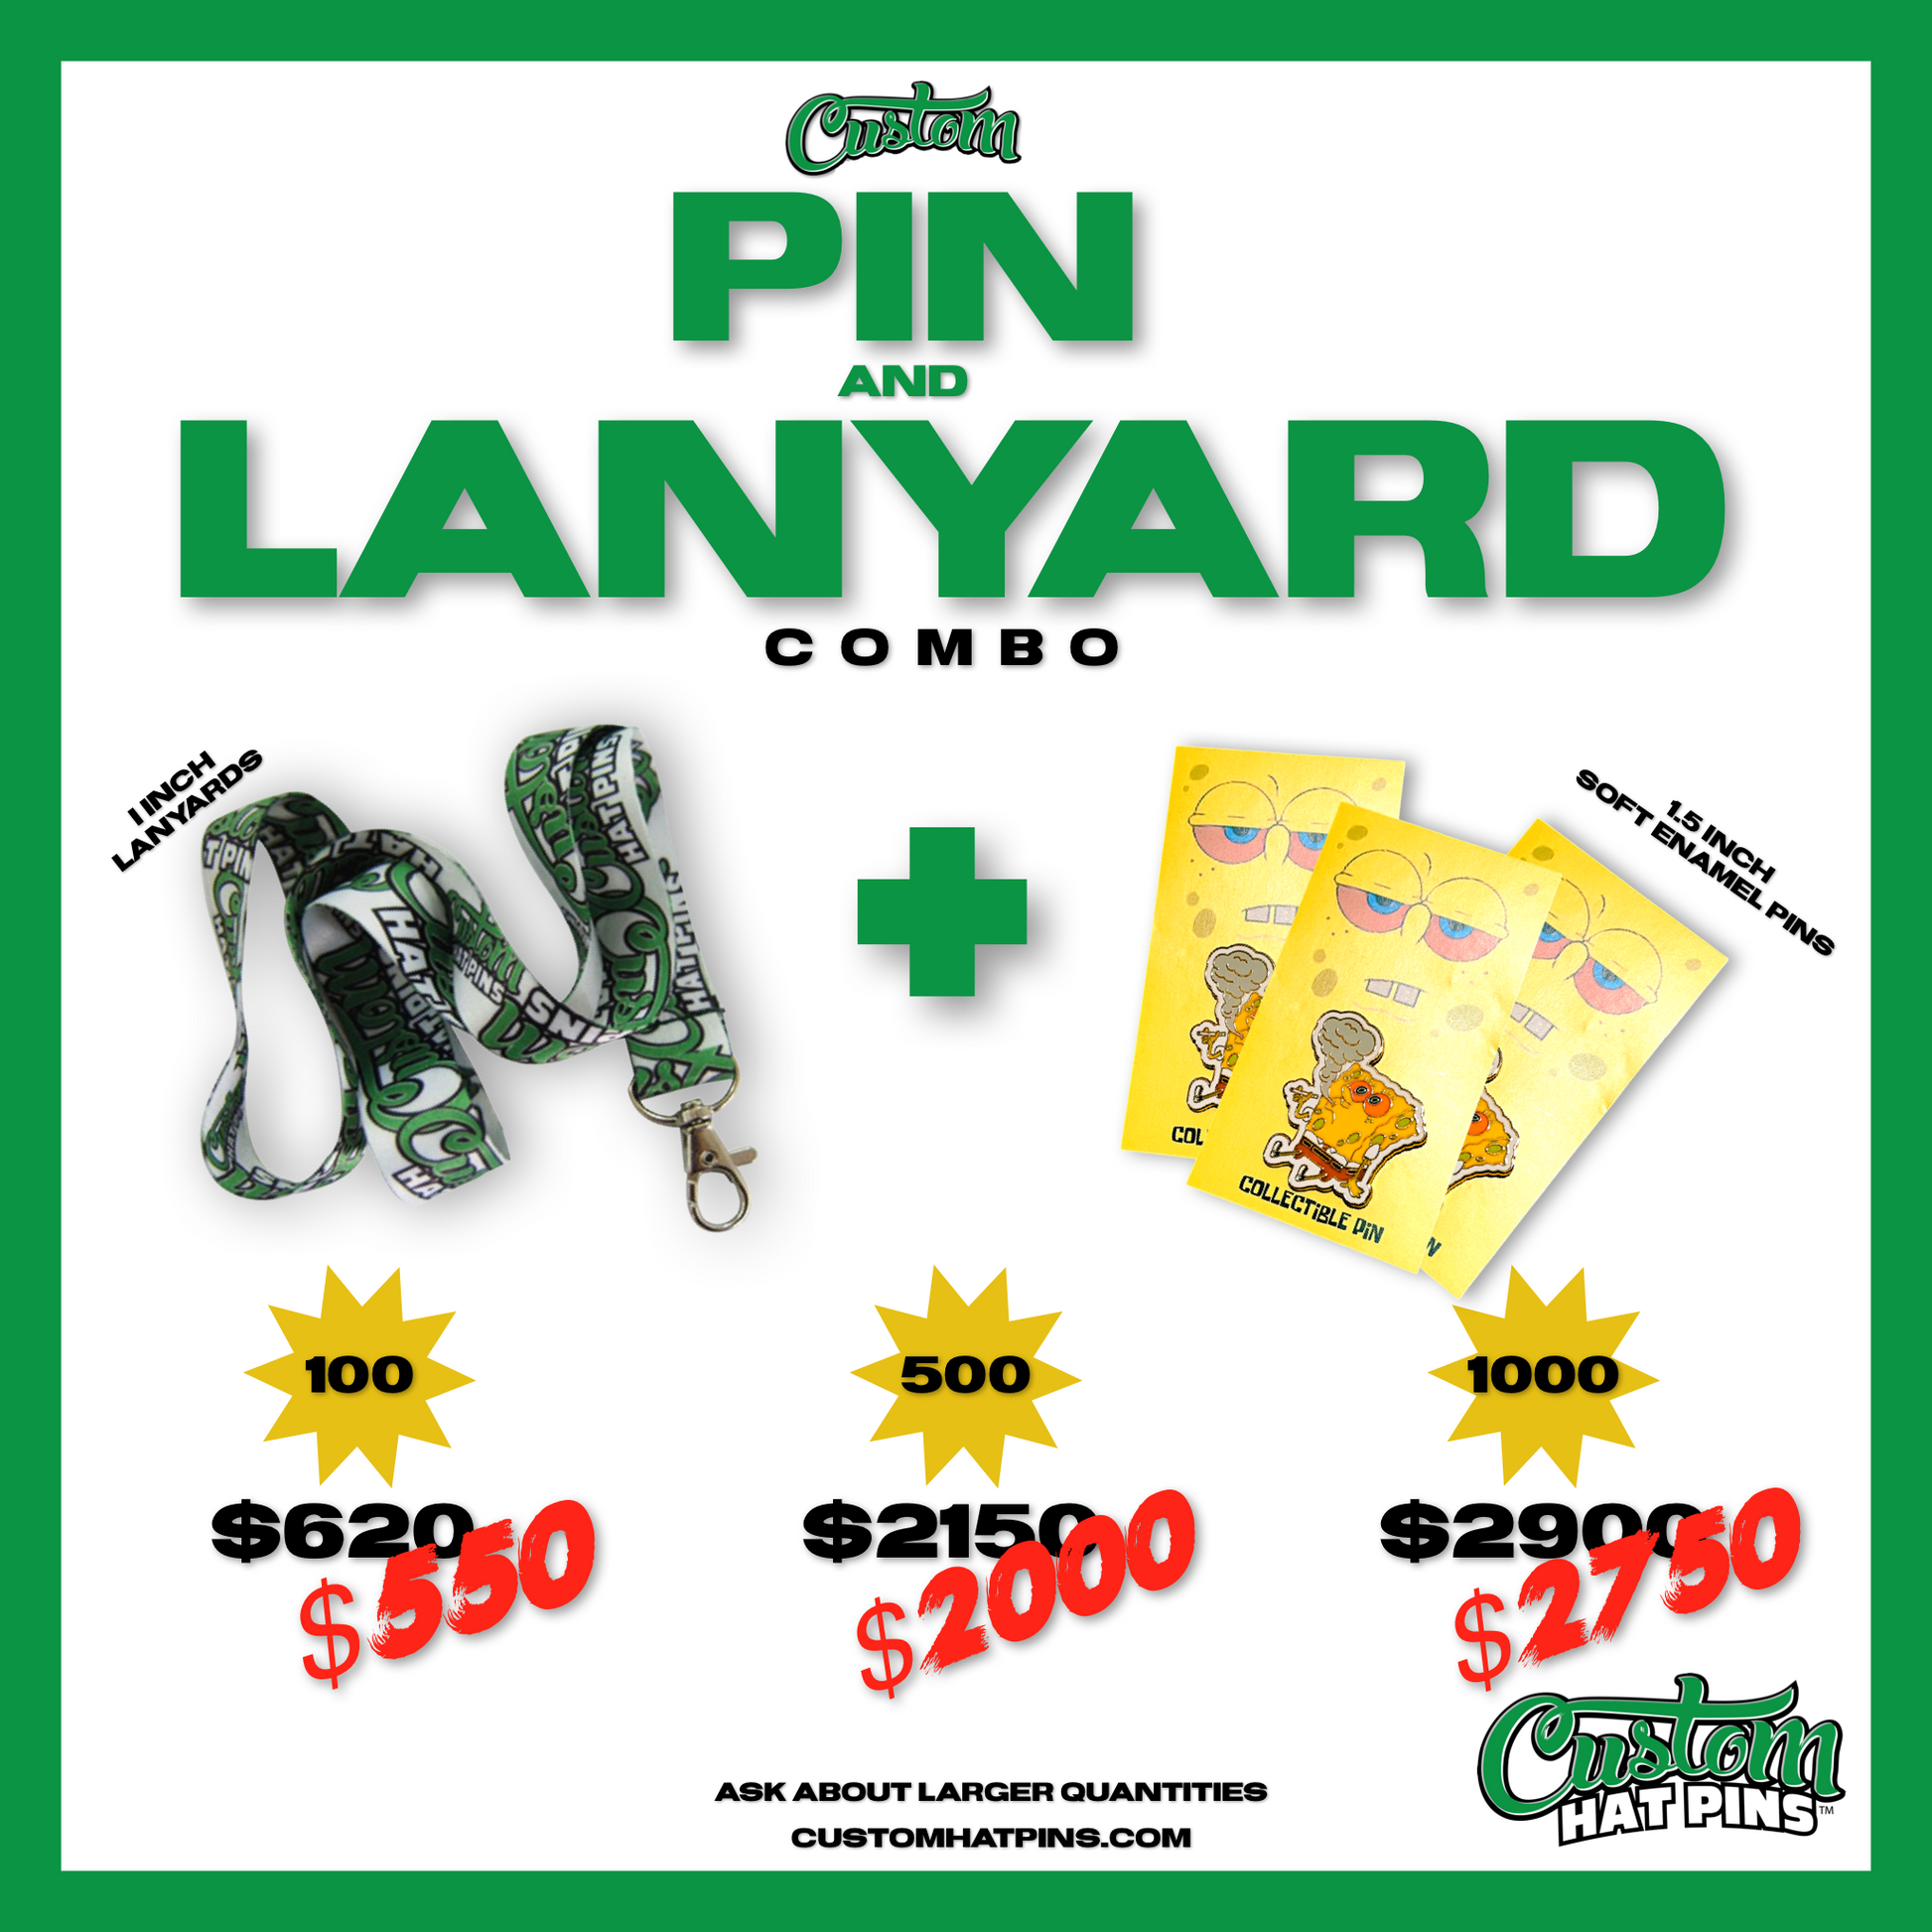 Lanyard Combo - 500Pin and Lanyard Combo - 500 of each - Custom Hat PinsCustom Hat Pins